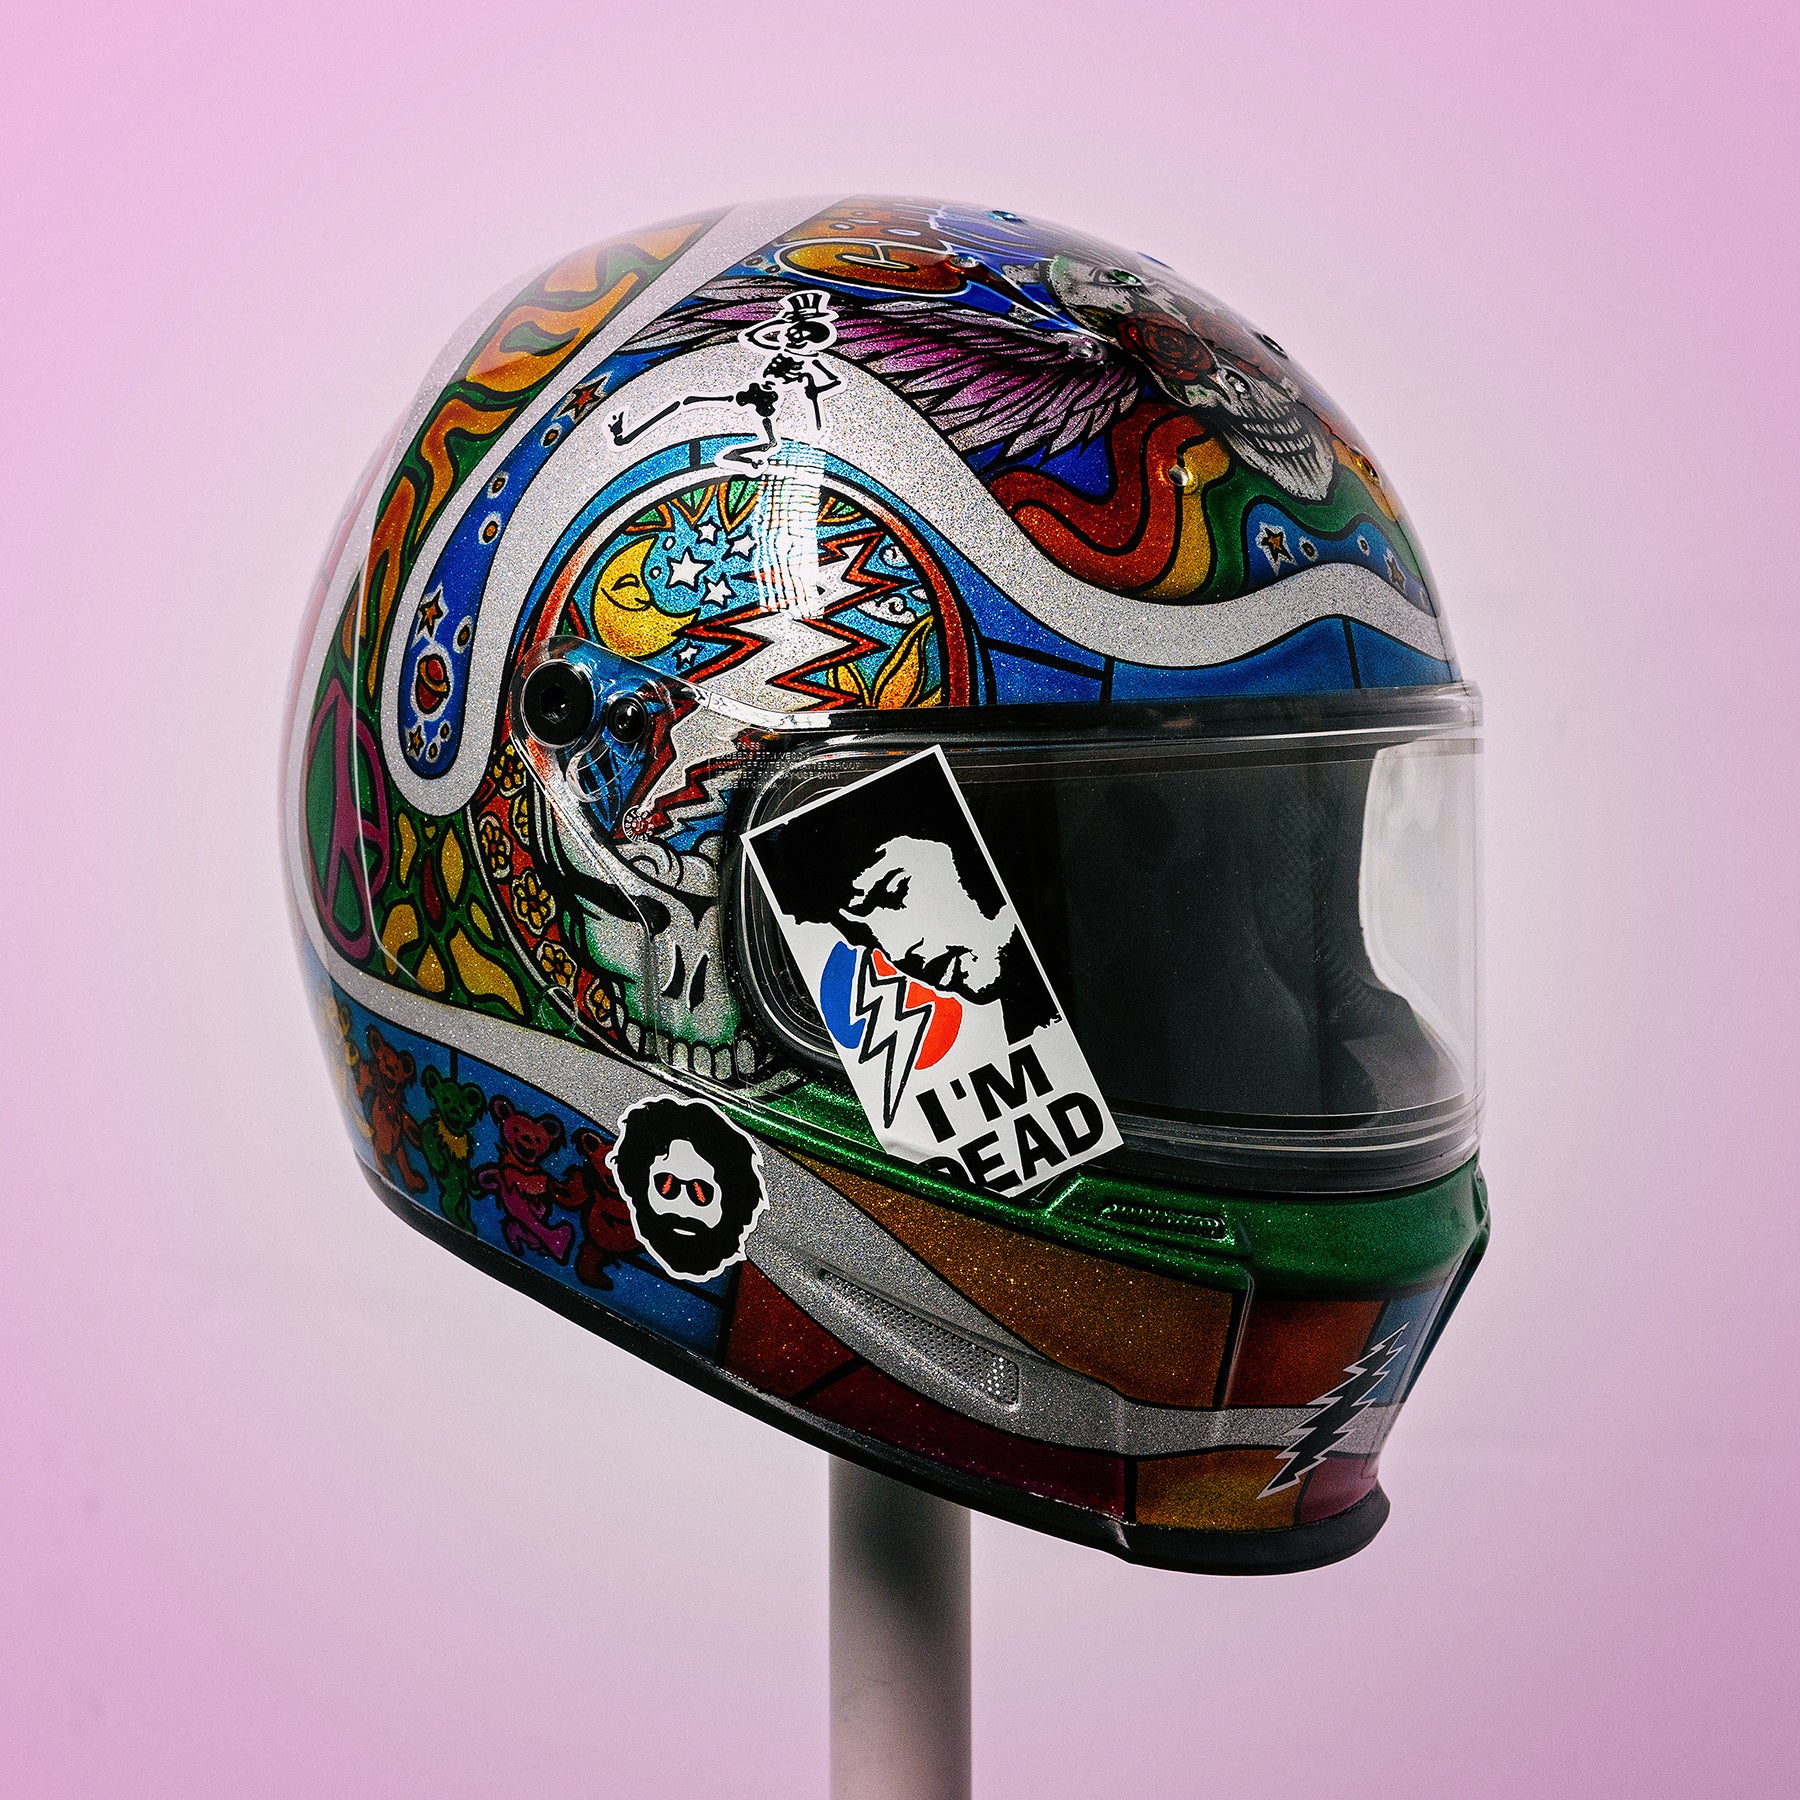 Trippy Ten helmet art show Pittsburgh Glory Daze motorcycle show Bell Helmets Paint Zoo Drummond